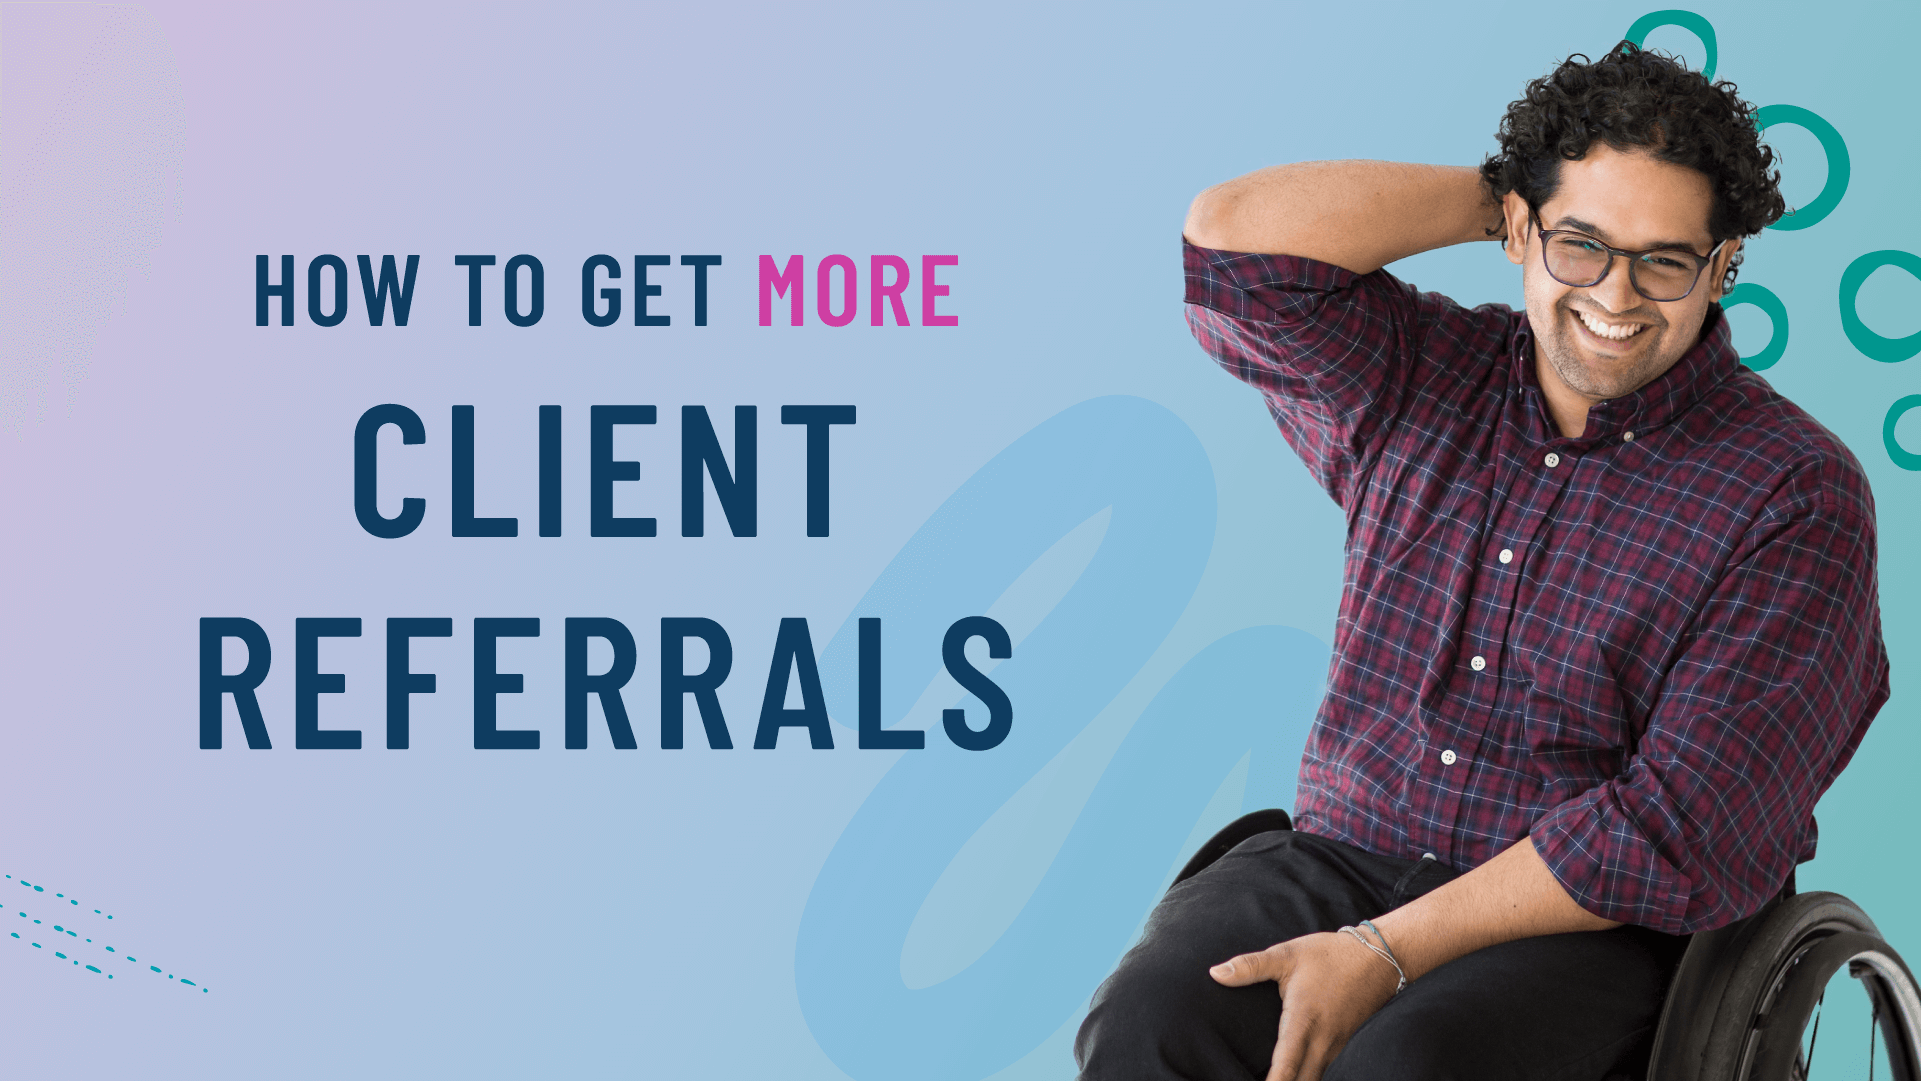 7 Ways to Get More Client Referrals